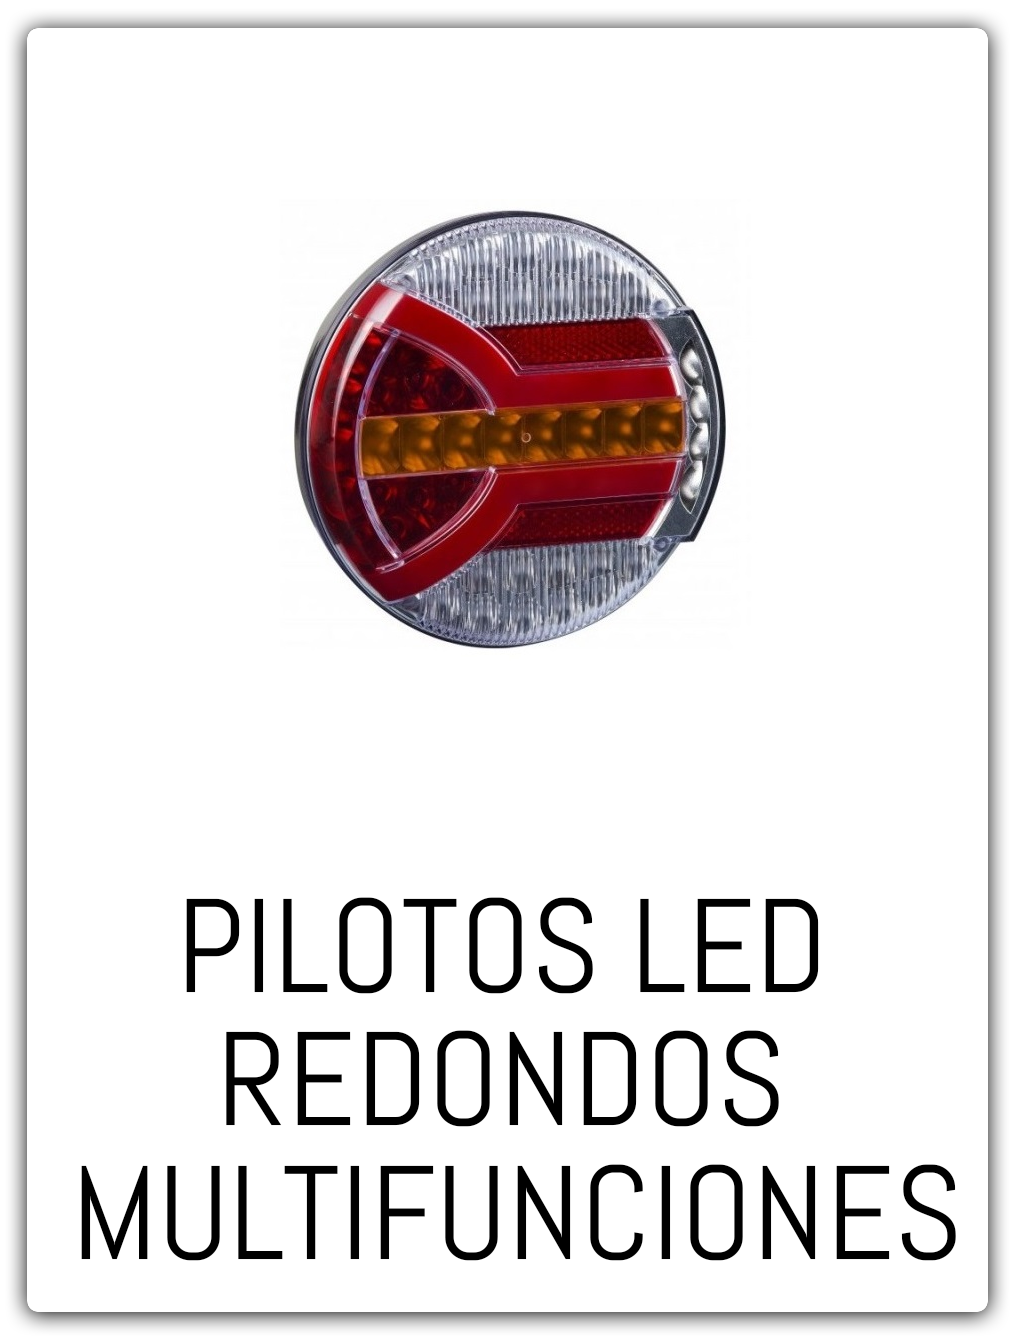 PILOTOS LED MULTIFUNCIONES 1.png